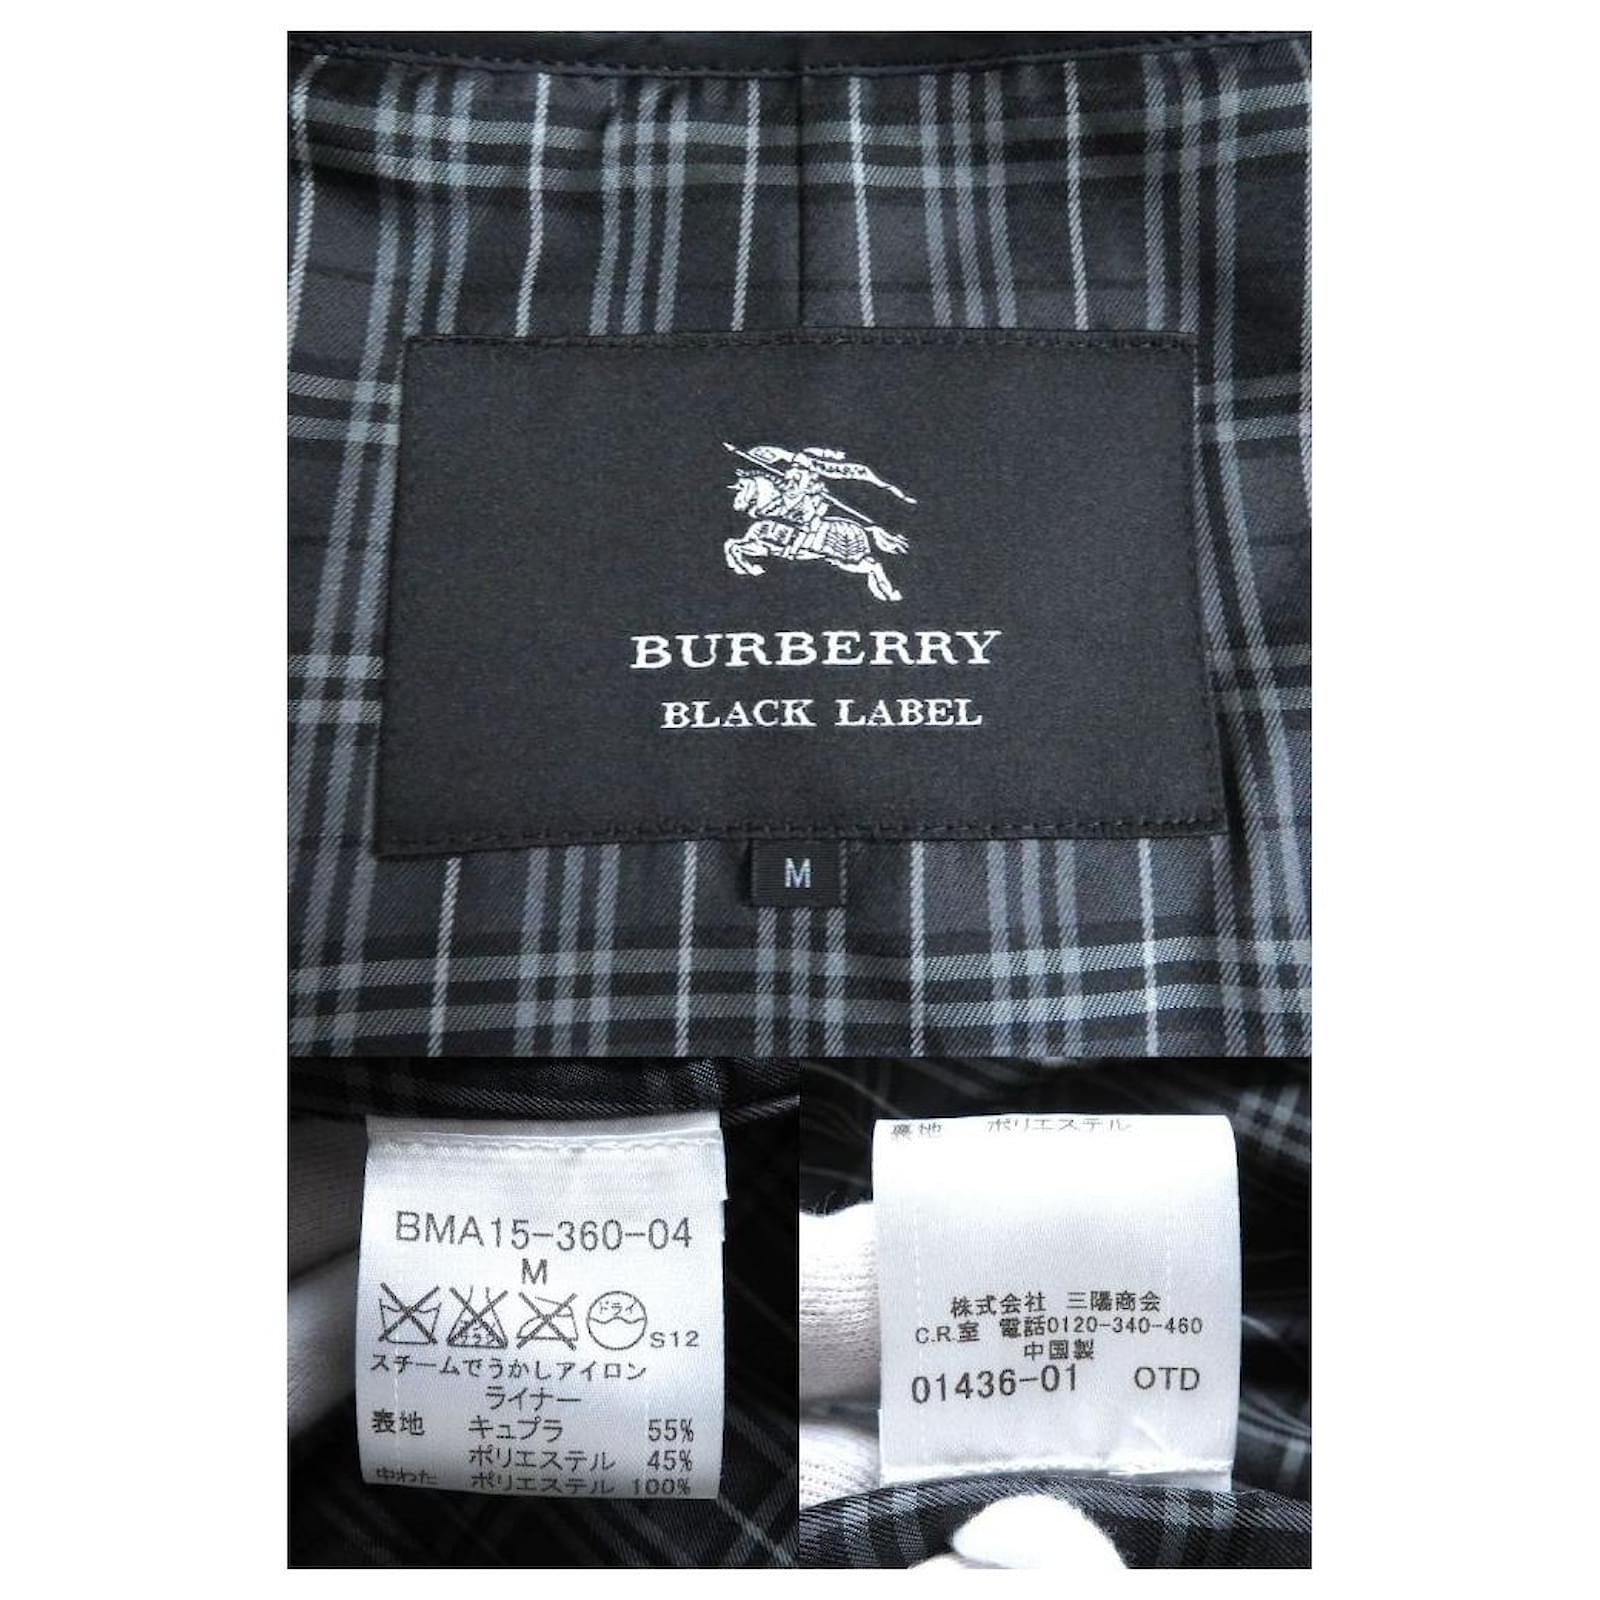 Used] Genuine △ BURBERRY BLACKLABEL Burberry black label batting